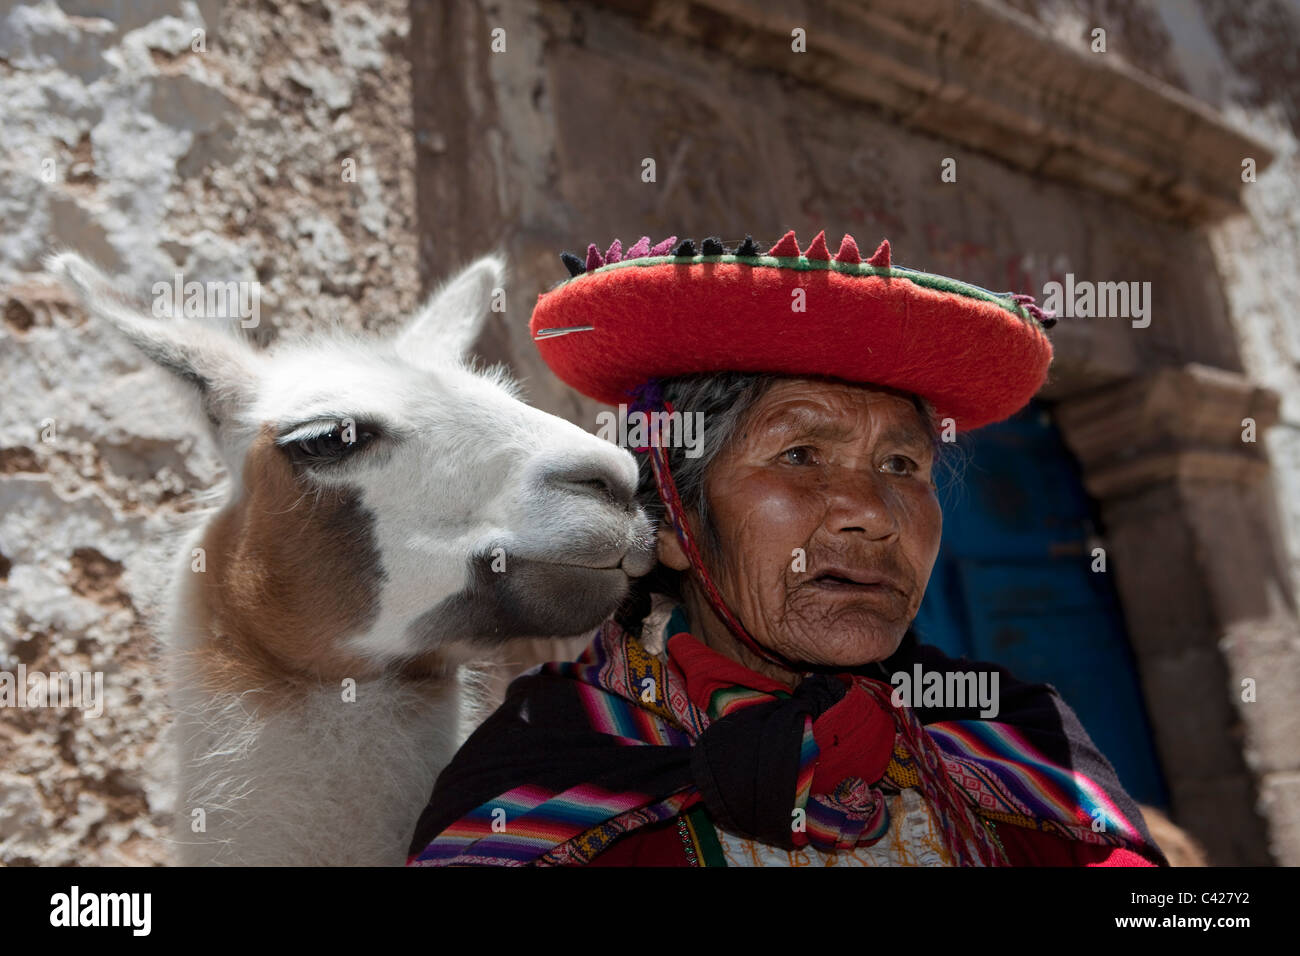 Peru, Cusco, Cuzco, Old Indian woman with llama in San Blas district. UNESCO World Heritage Site. Stock Photo